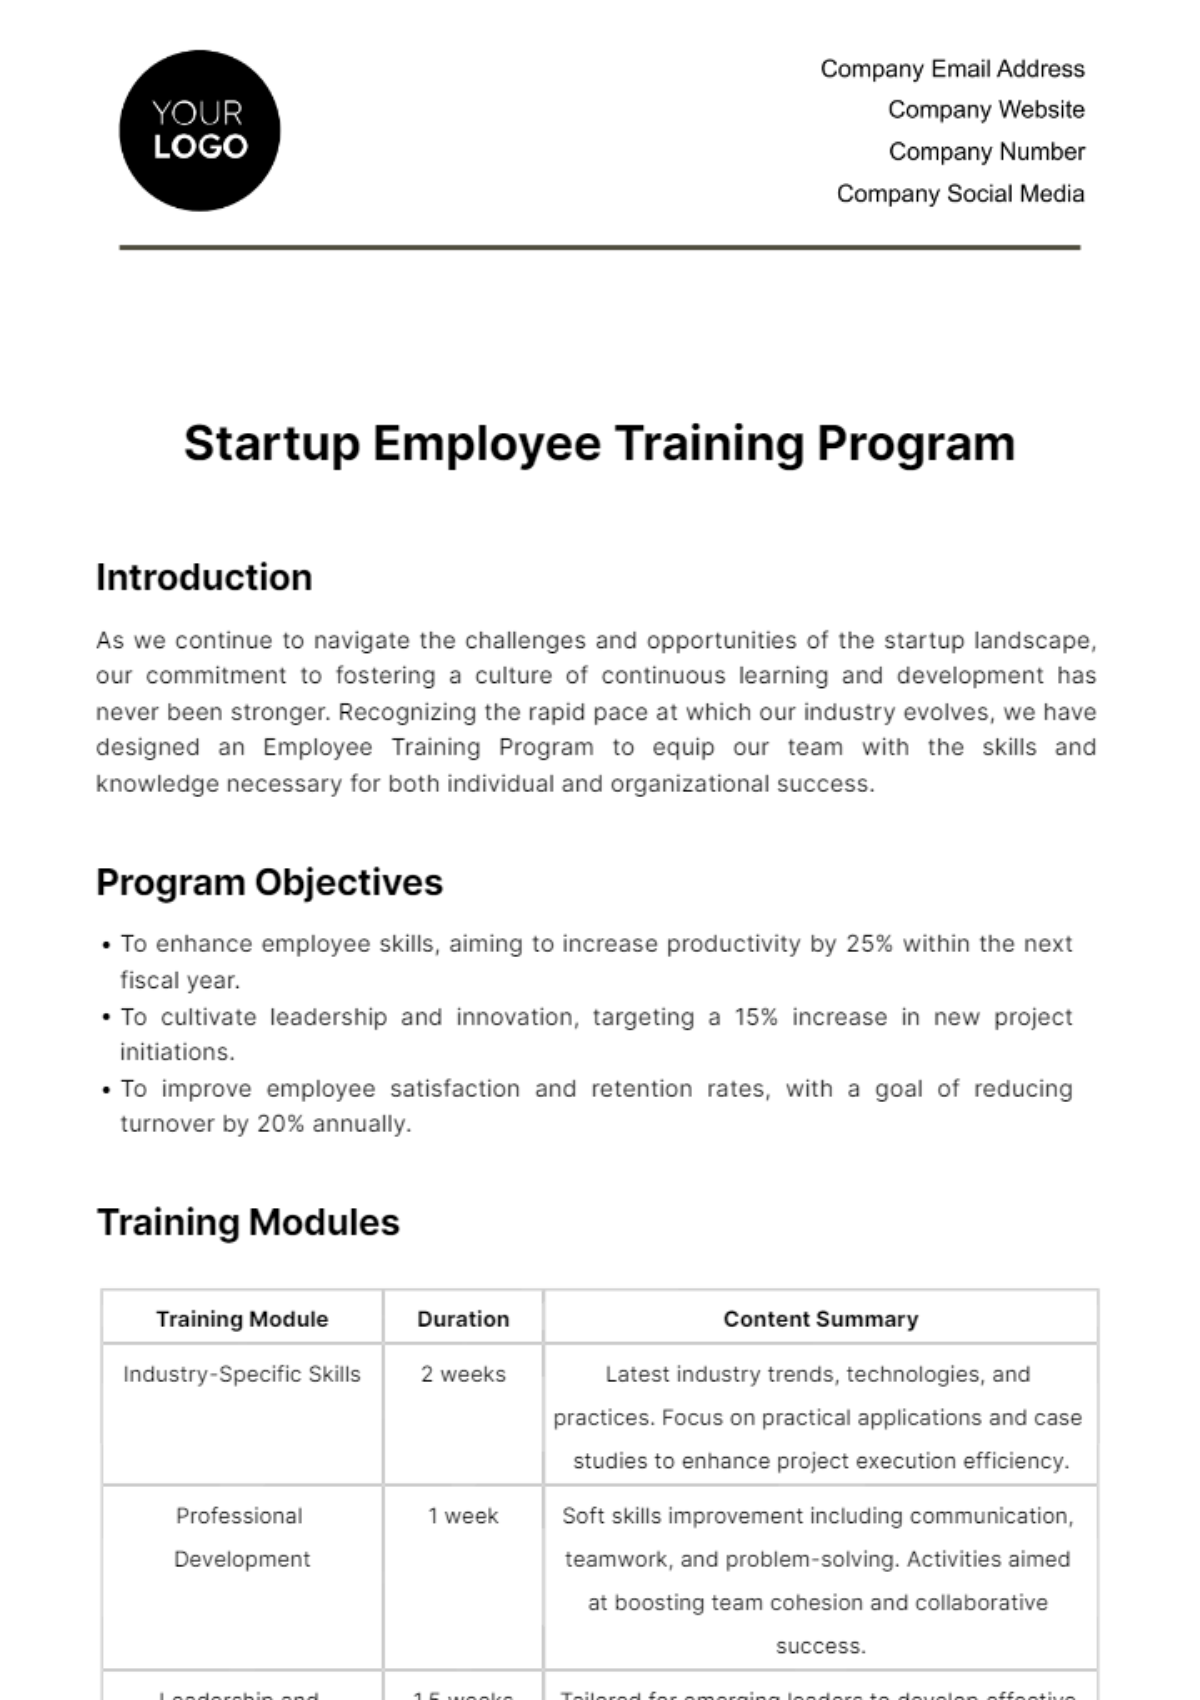 Startup Employee Training Program Template